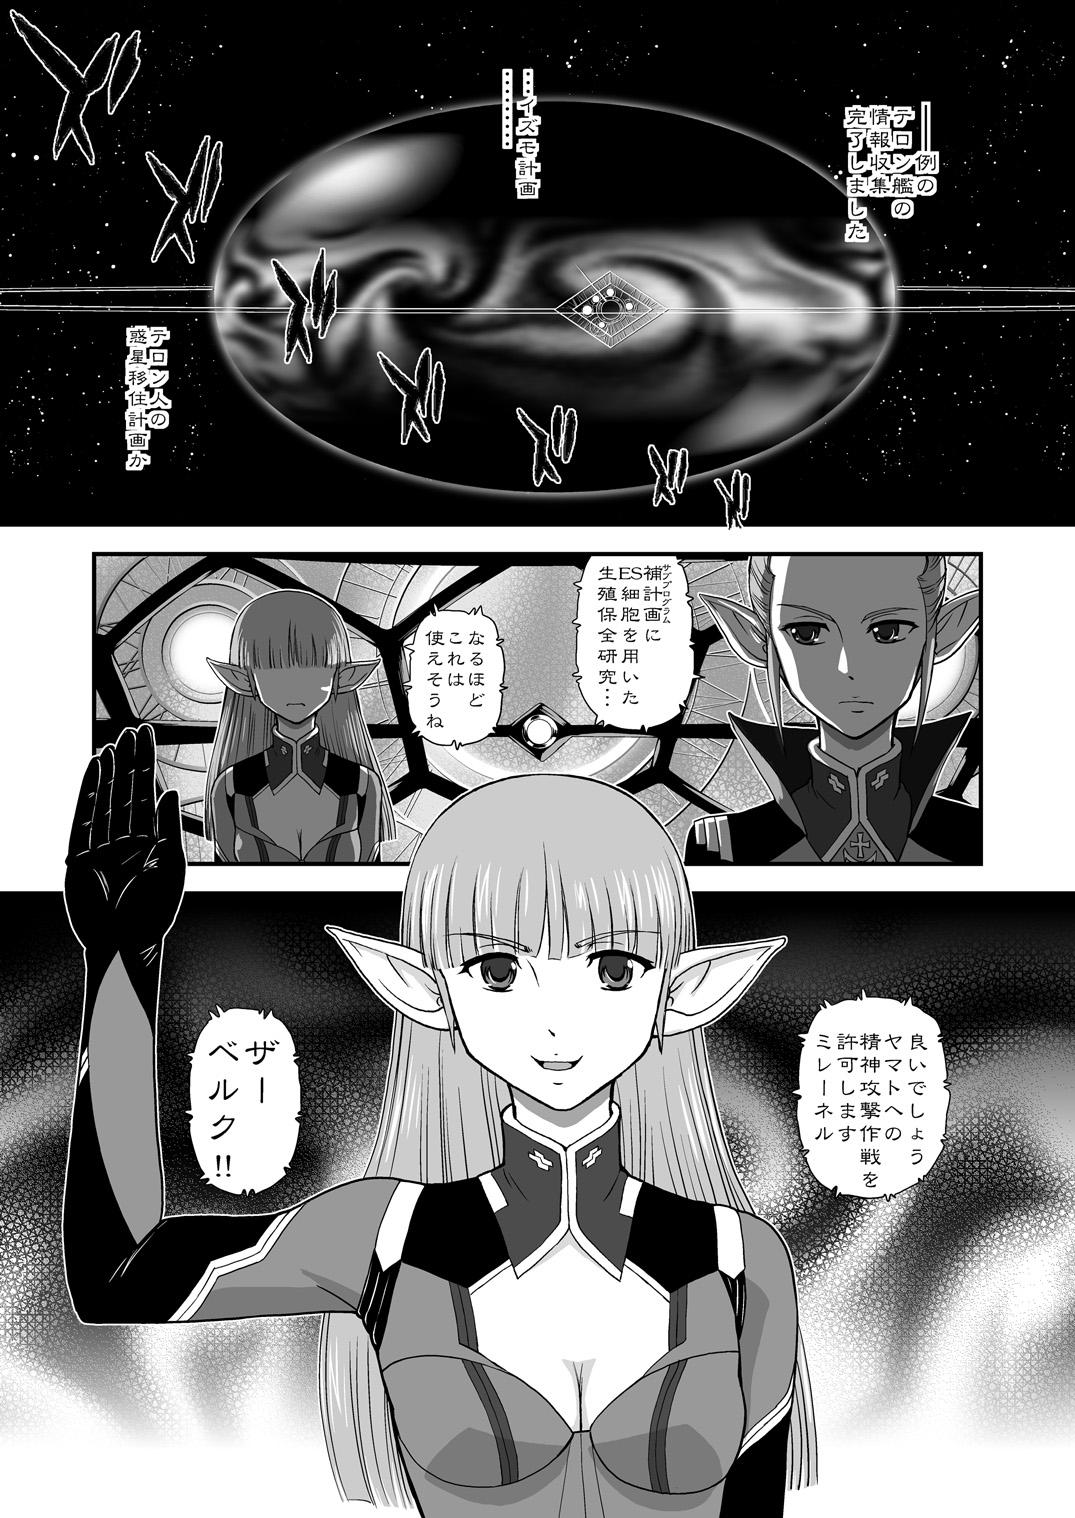 Redhead YAMATO2199 Alternative - Space battleship yamato Virgin - Page 3